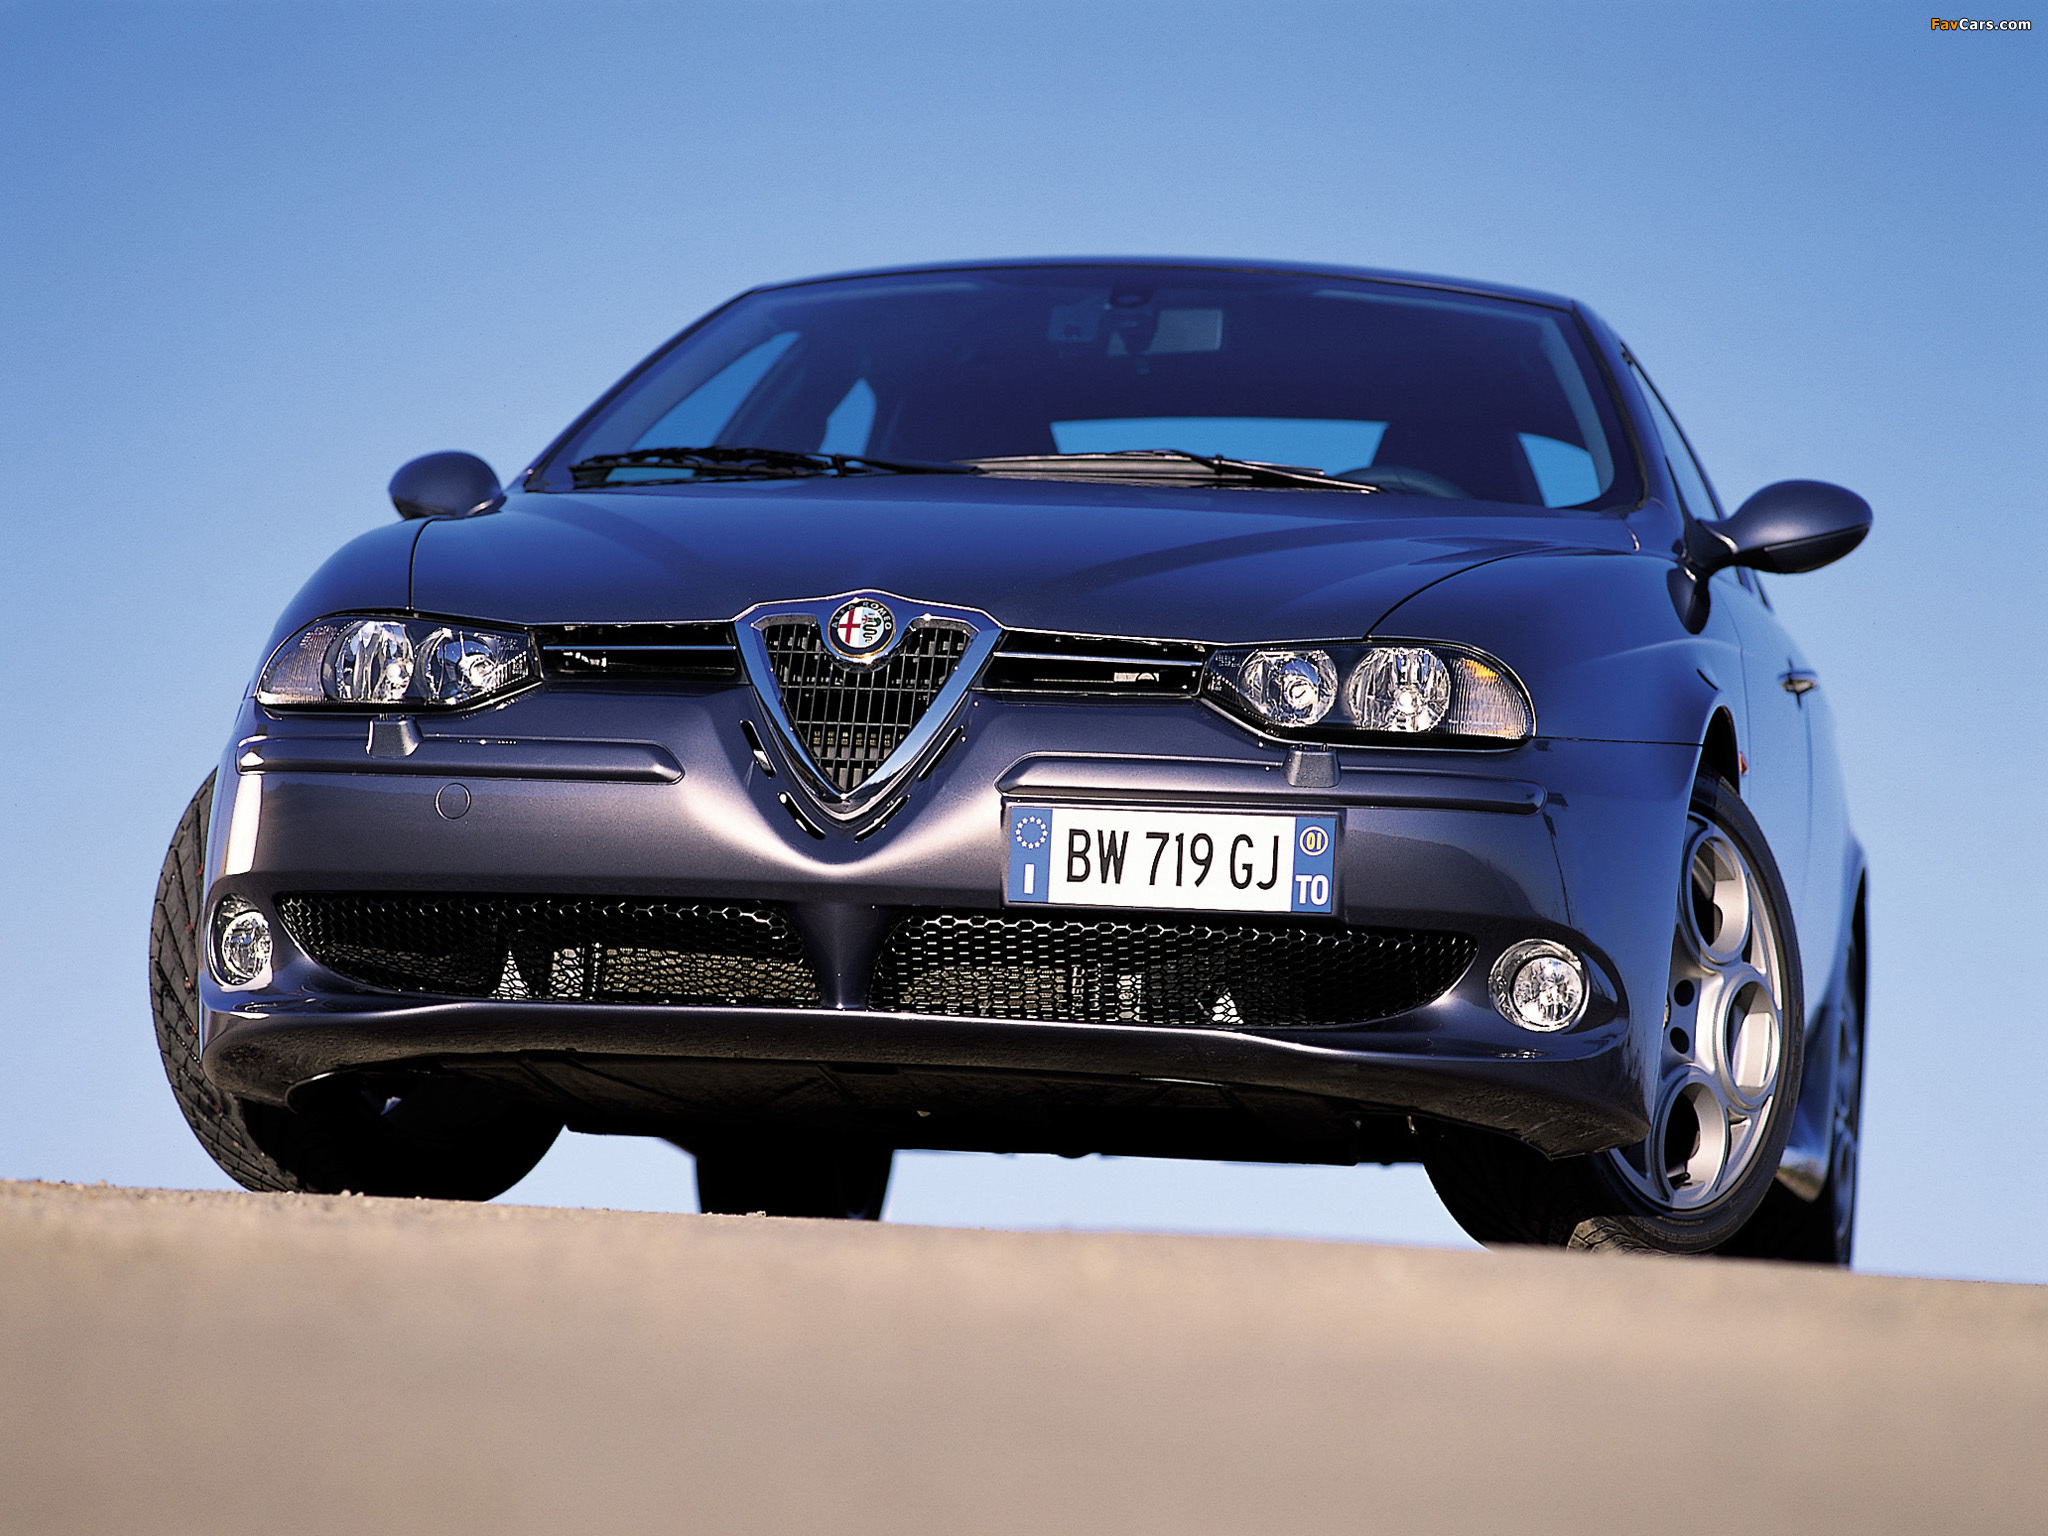 Alfa Romeo 156 GTA 932A (2002–2005) images (2048 x 1536)